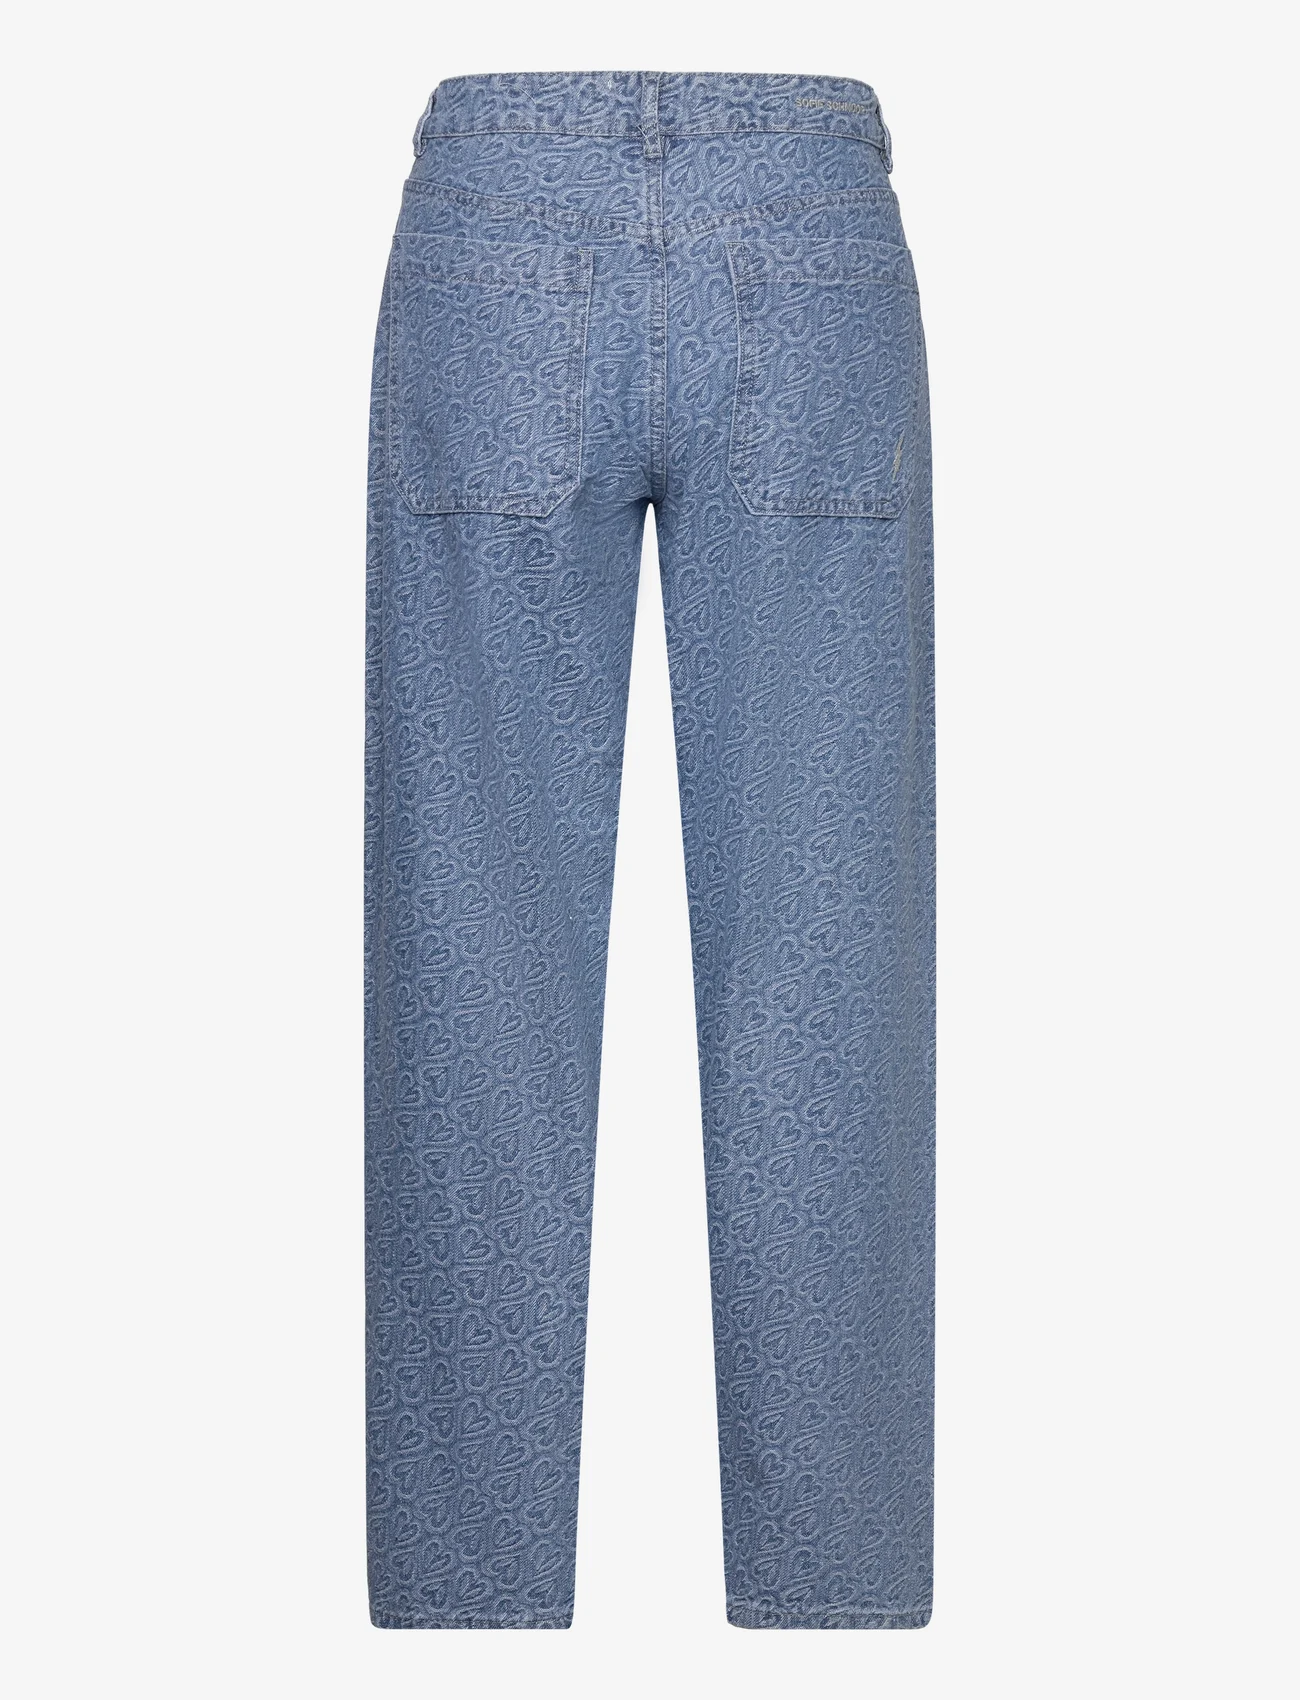 Sofie Schnoor - Trousers - wide leg jeans - light denim blue - 1